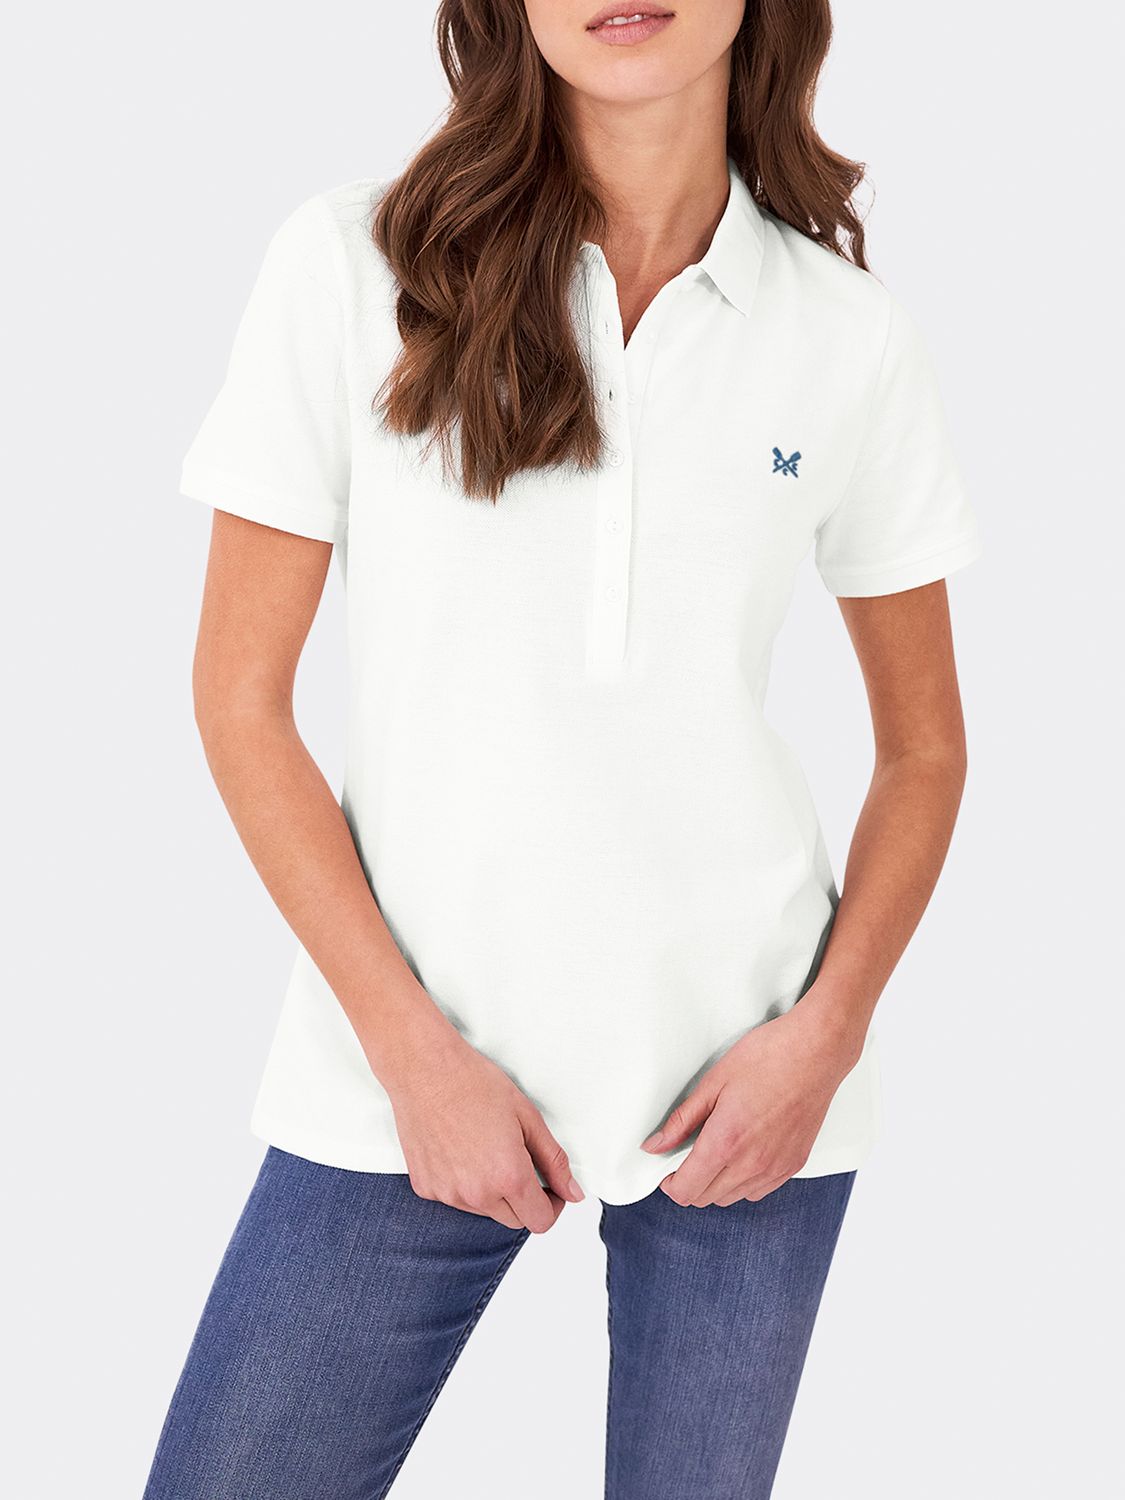 dannelse Ondartet sarkom Women's Polo Shirts | John Lewis & Partners